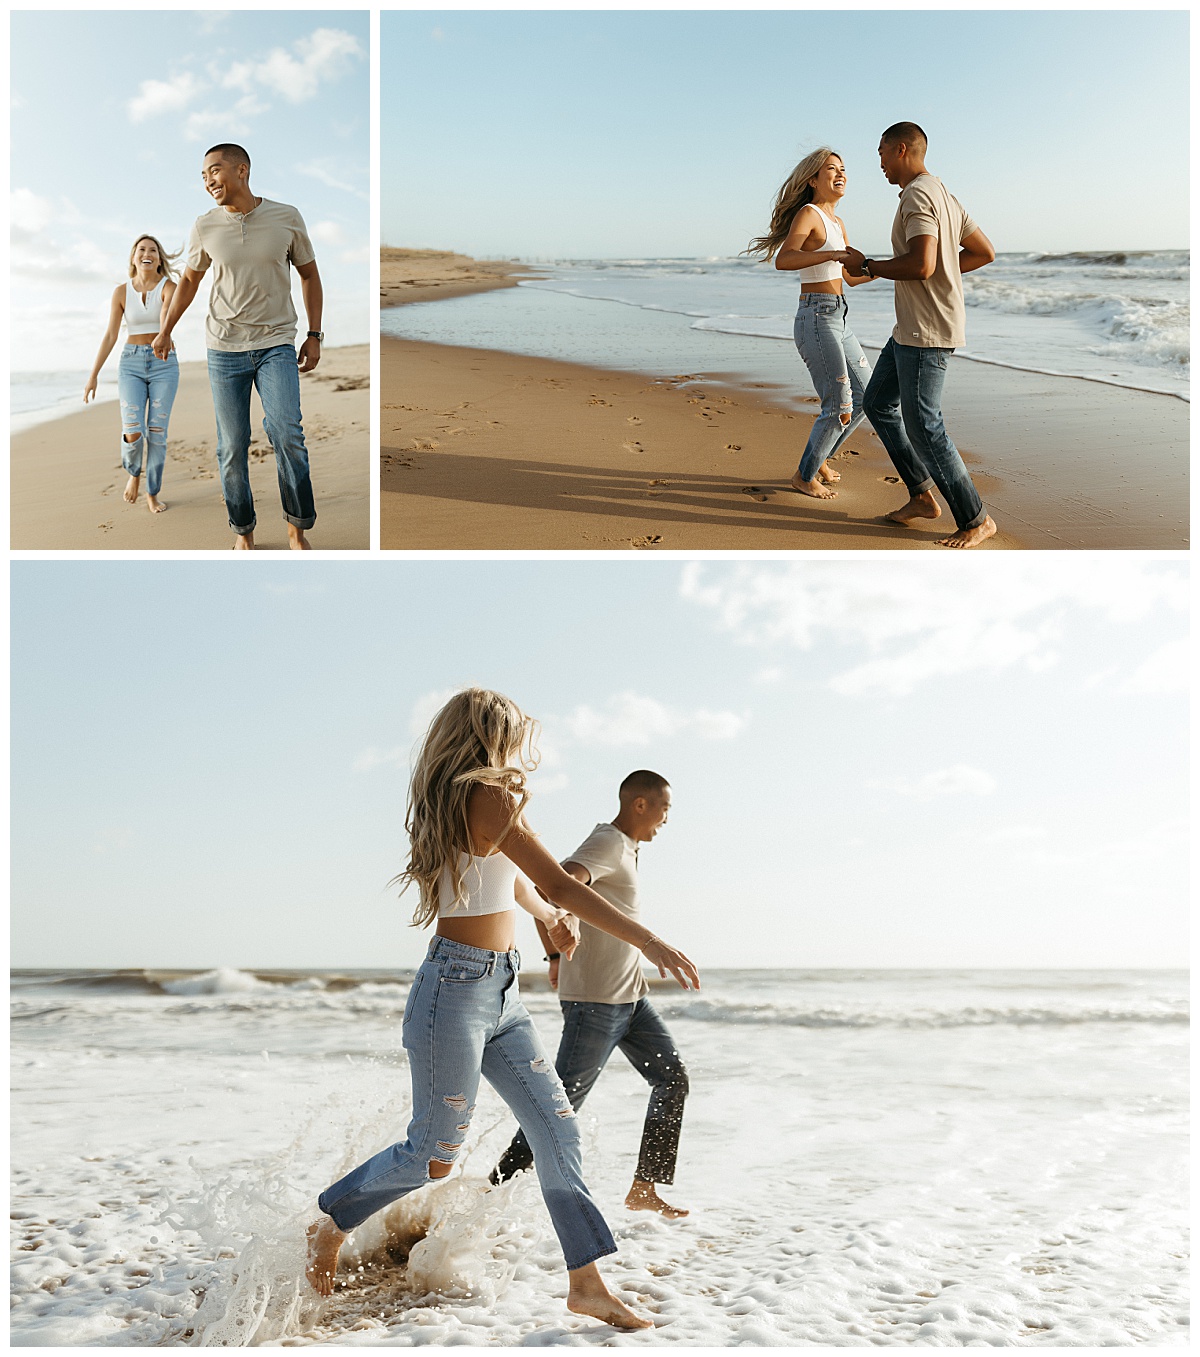 guy and girl dance together on beach by Virginia Beach photographer